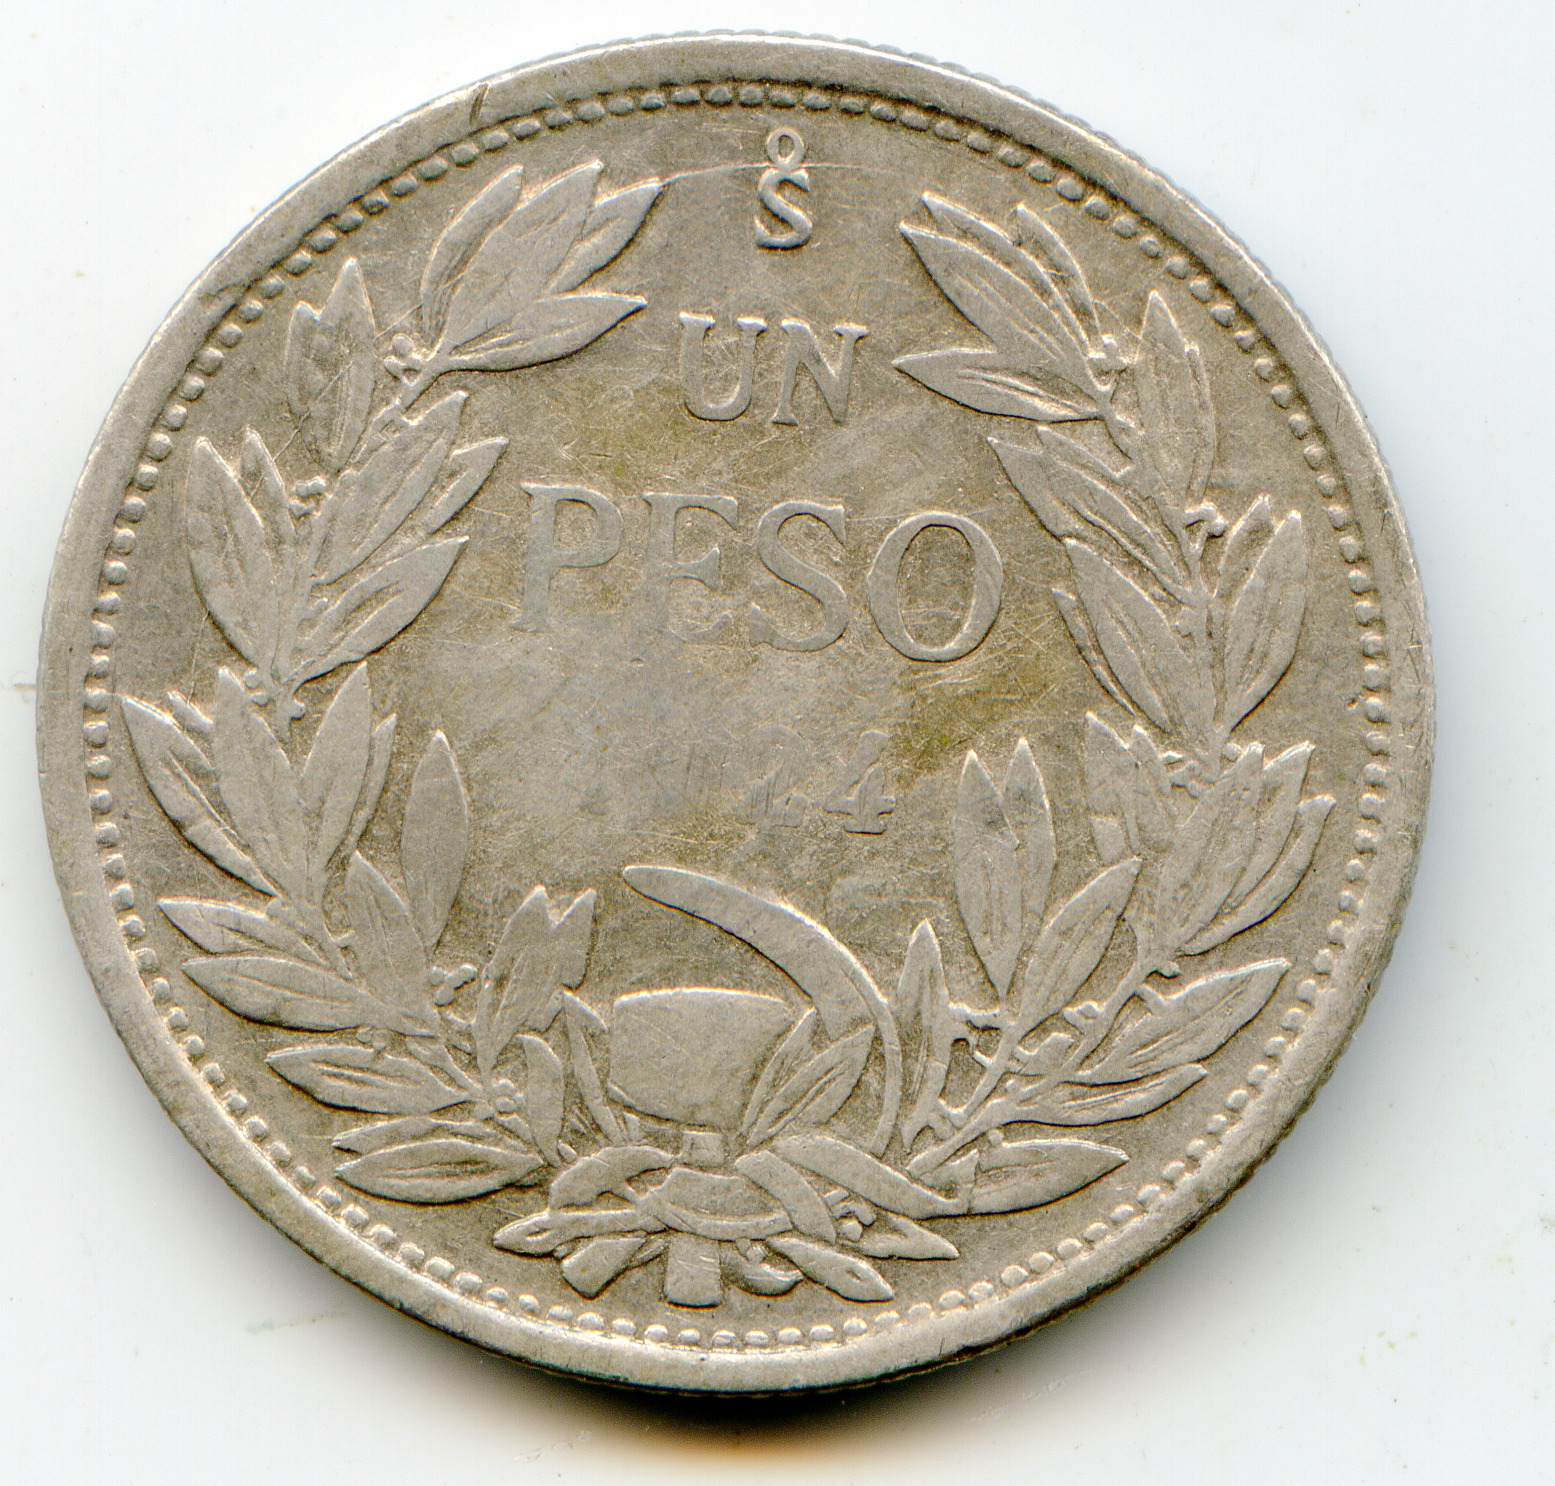 Chile Peso 1924 0.5 very scarce issue weak date side (Strike)   lotnov7237